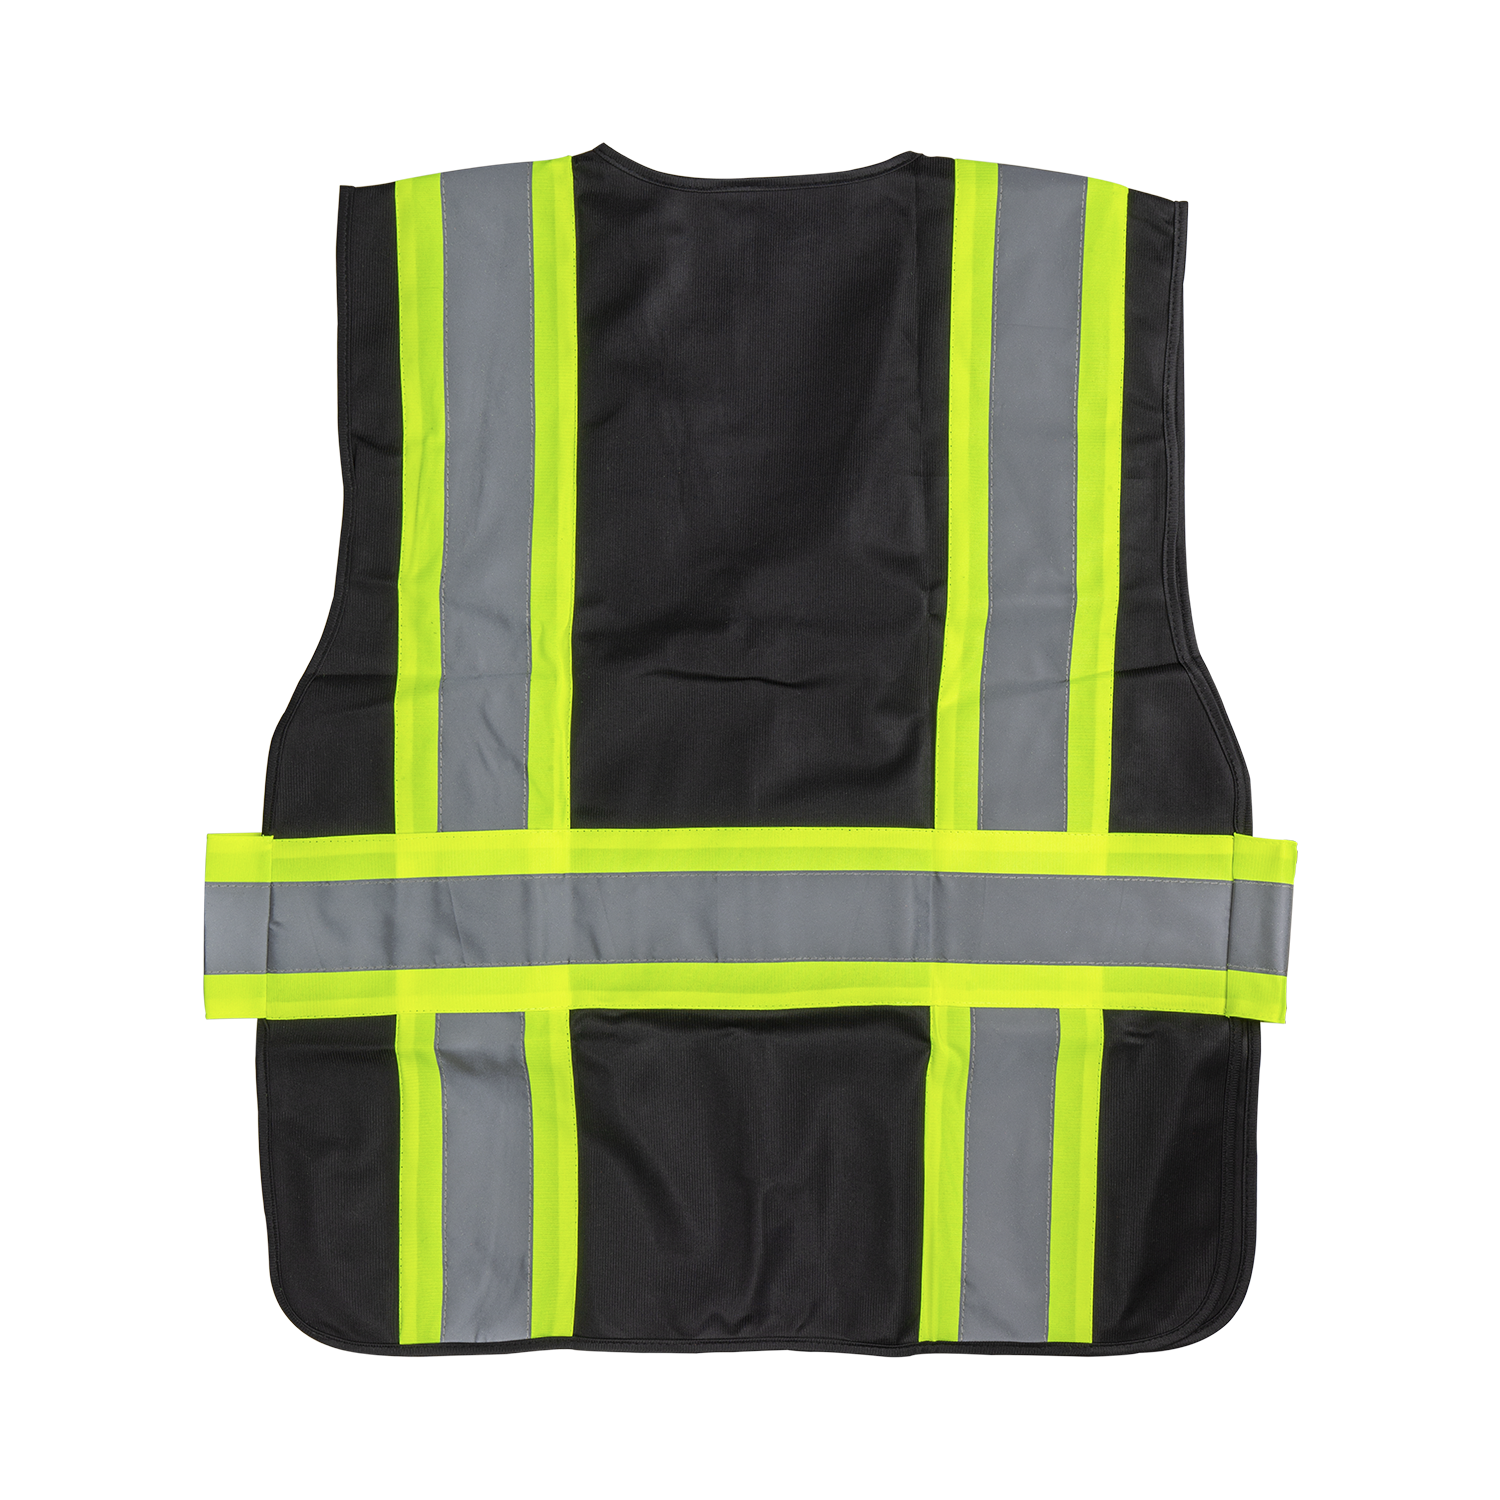 Karat High Visibility Reflective Safety Vest with Zipper Fastening (Black), Large - 1 pc